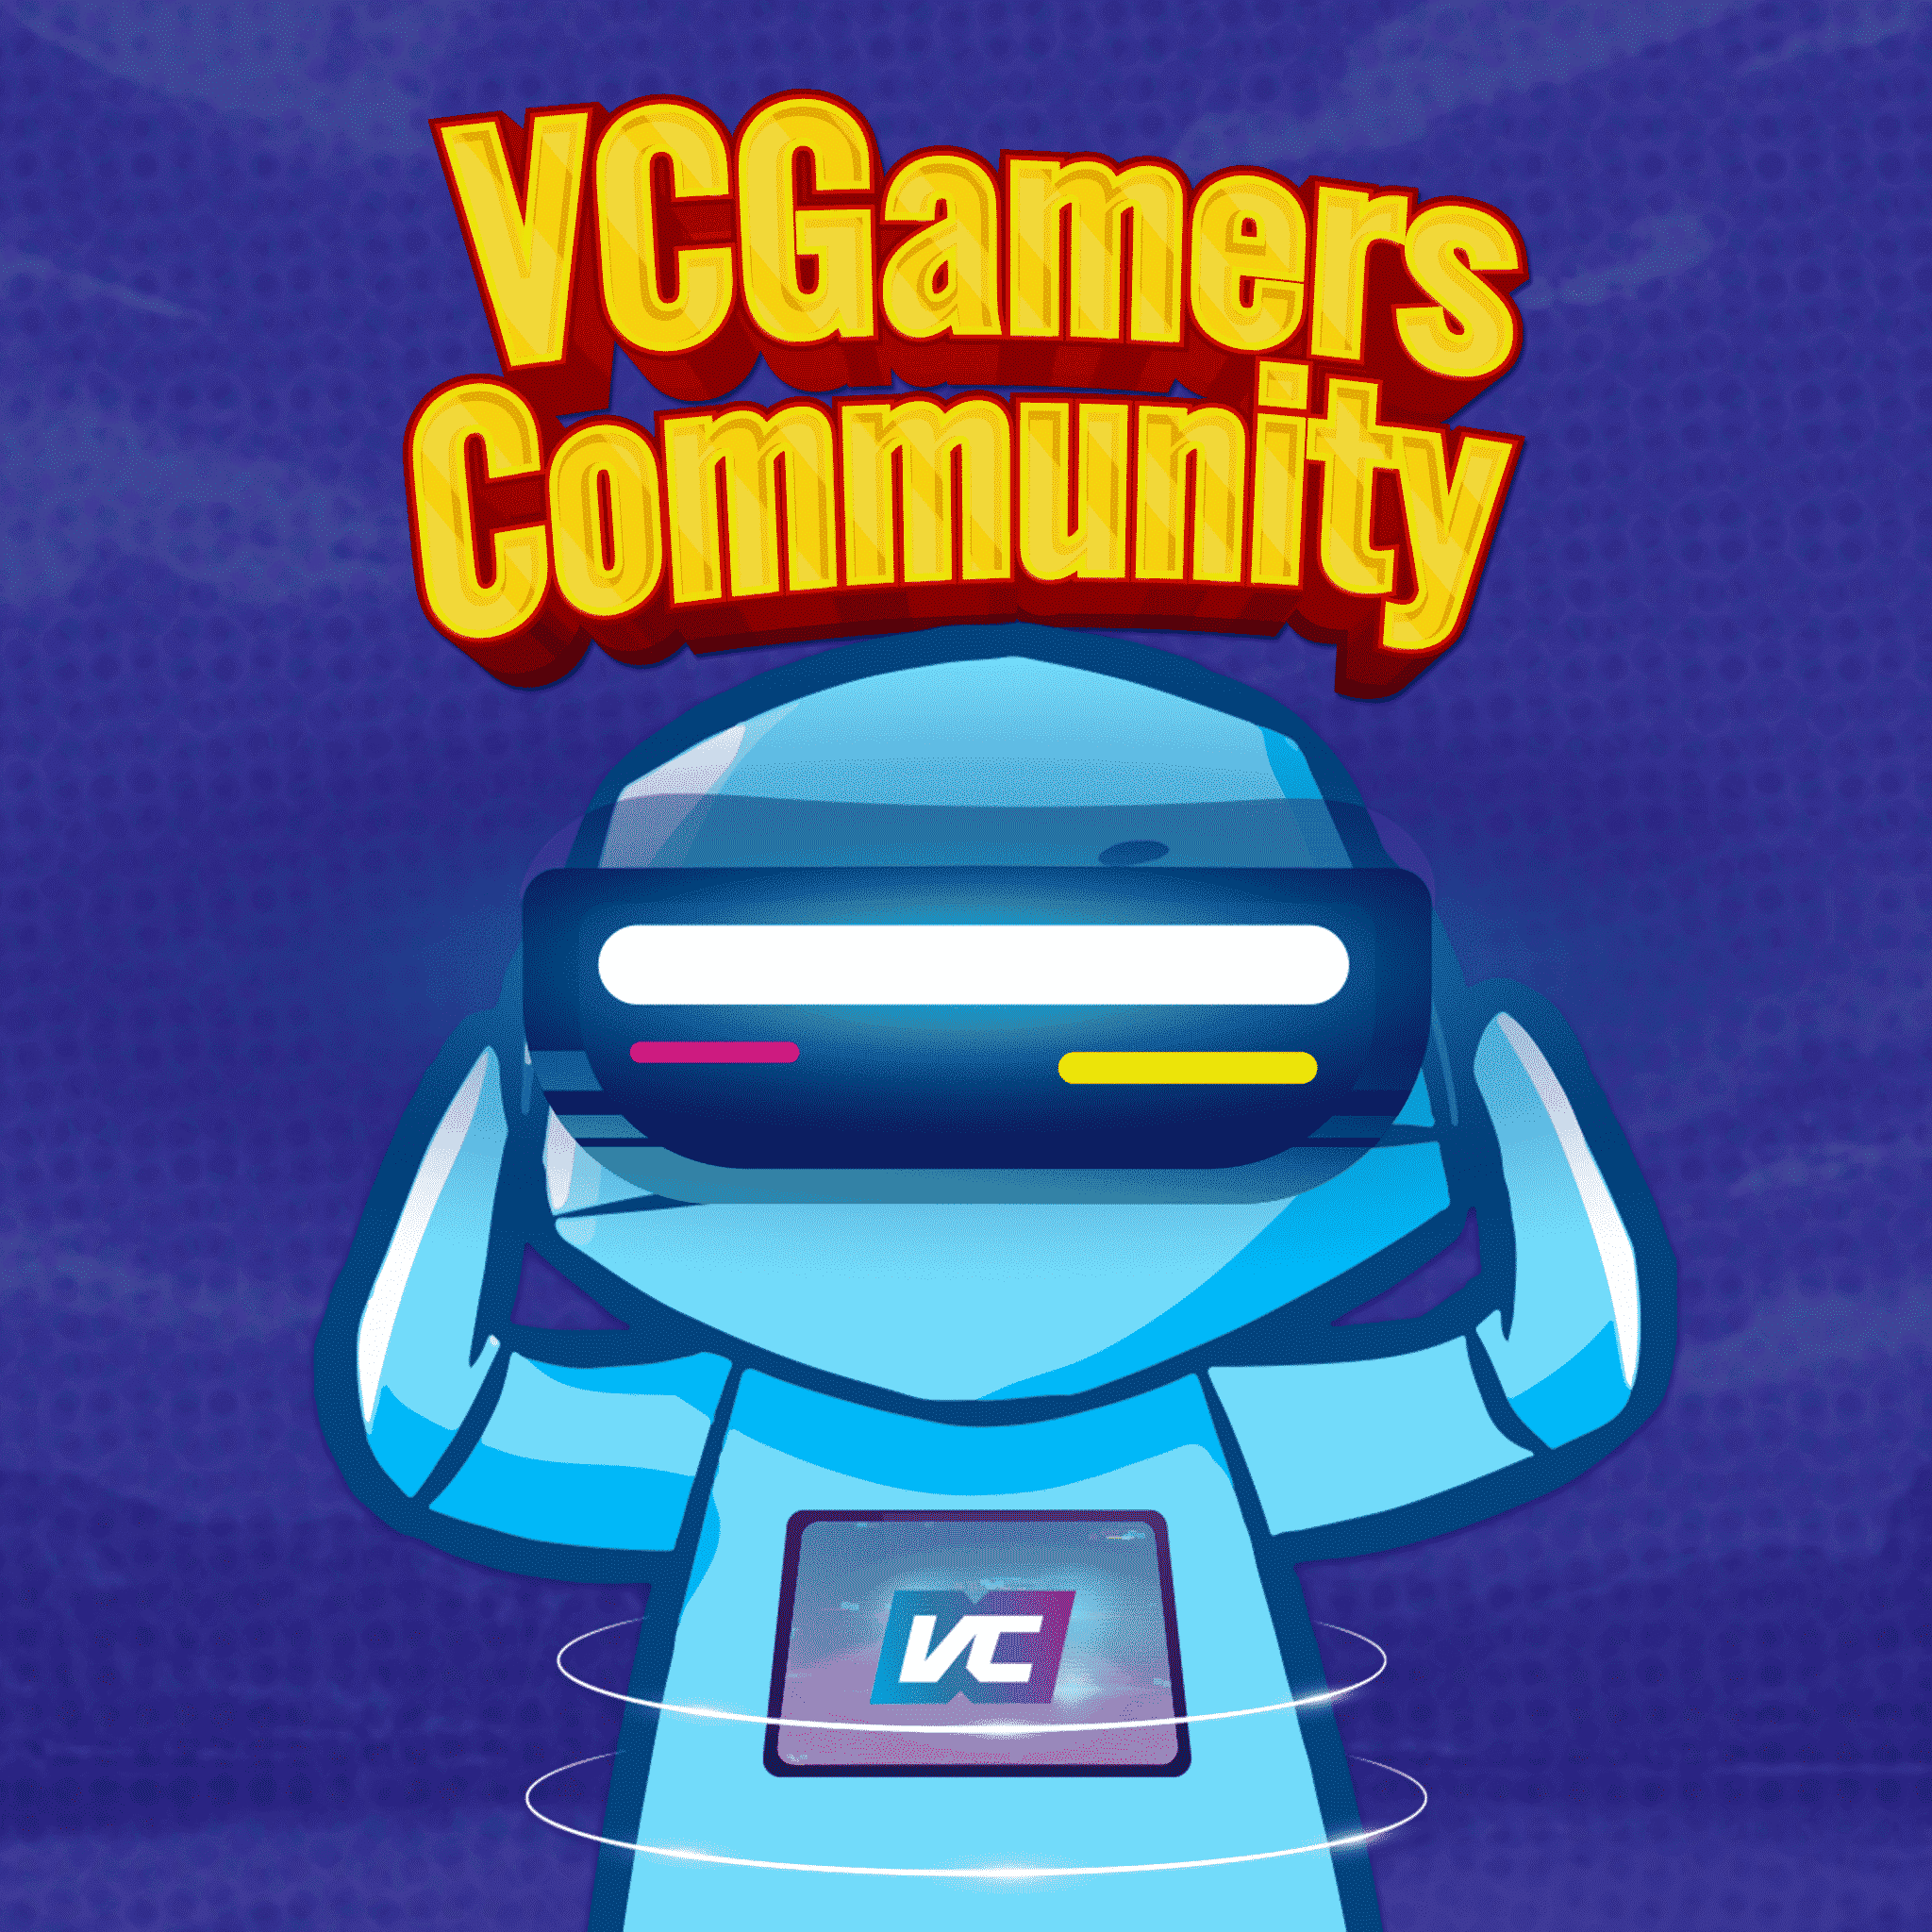 vcgamers 커뮤니티